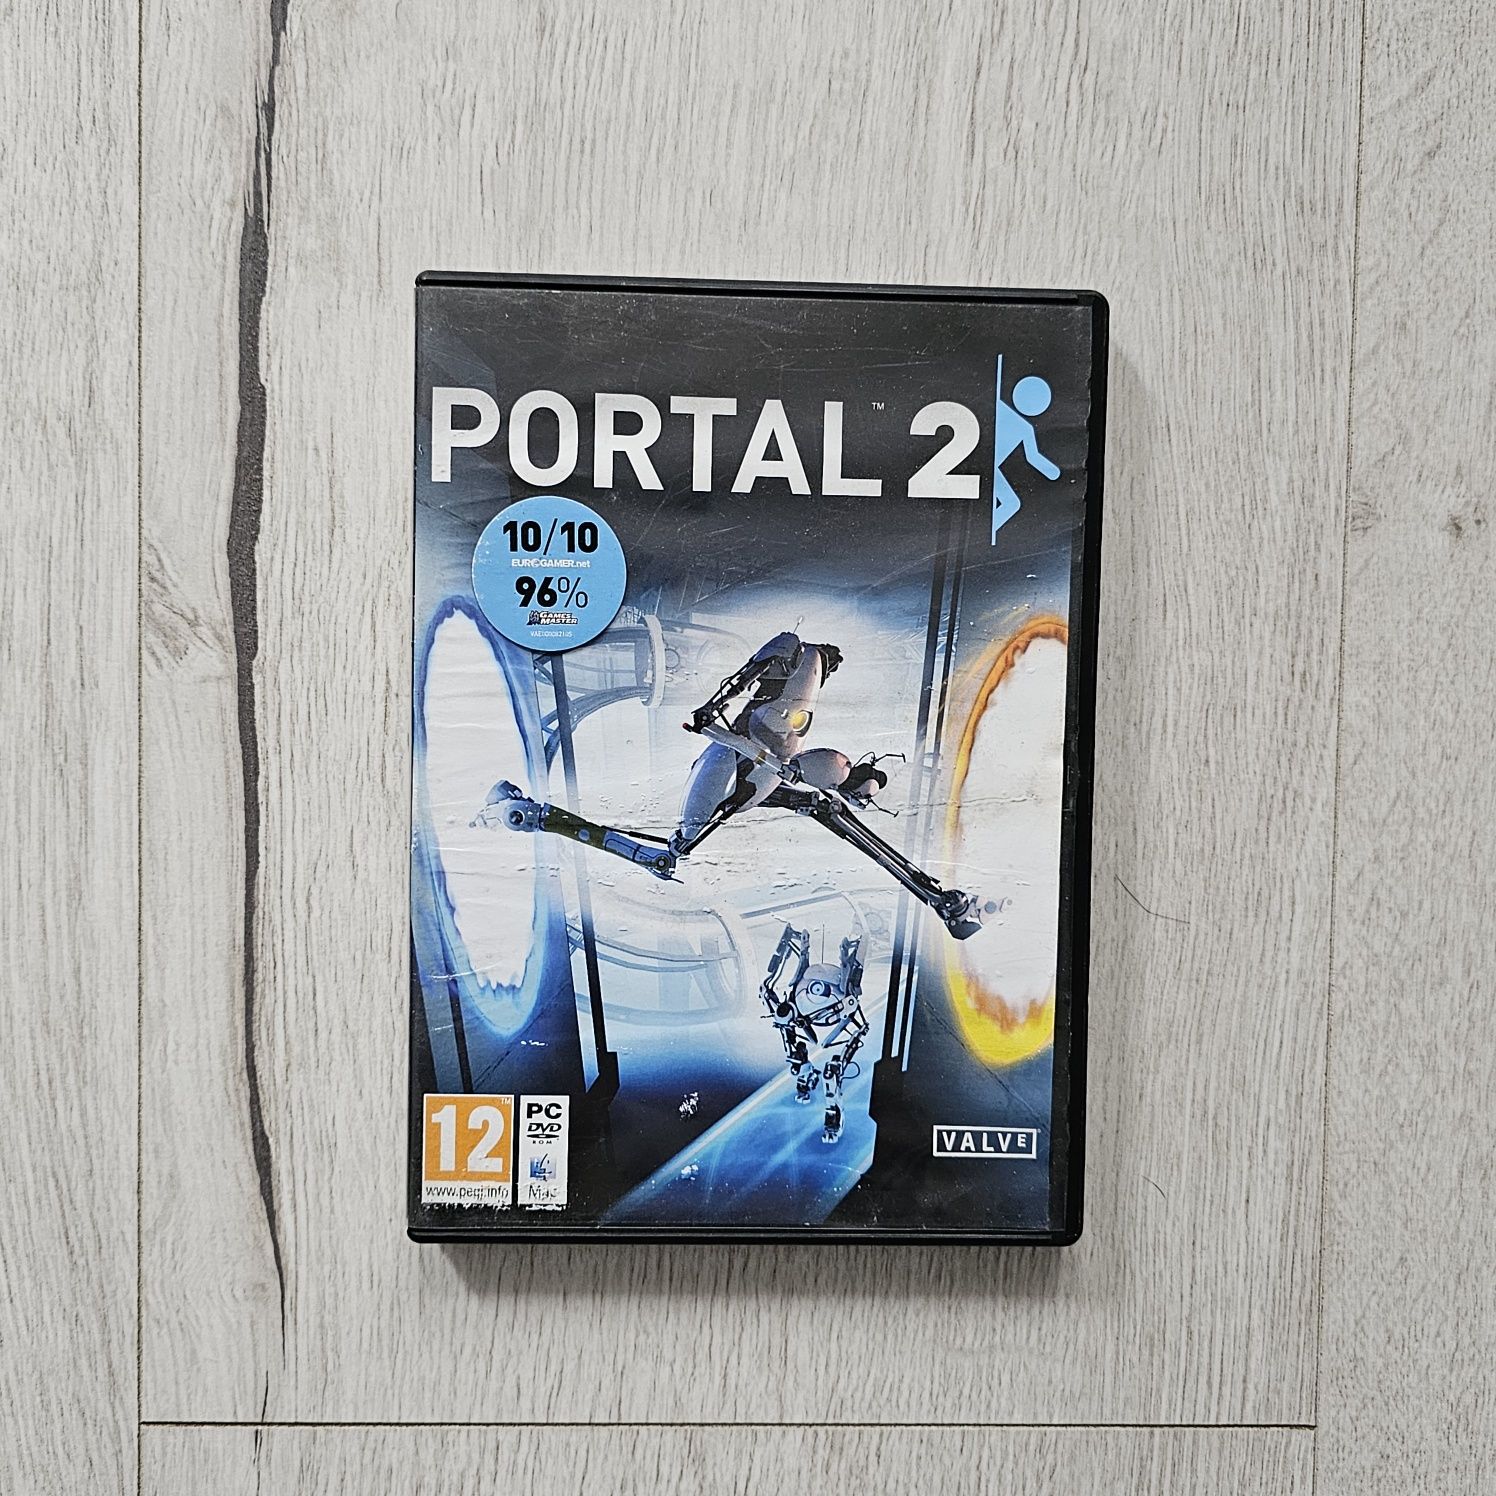 PORTAL 2 PC gra w stanie bardzo dobrym portal2 na dvd pd Valve